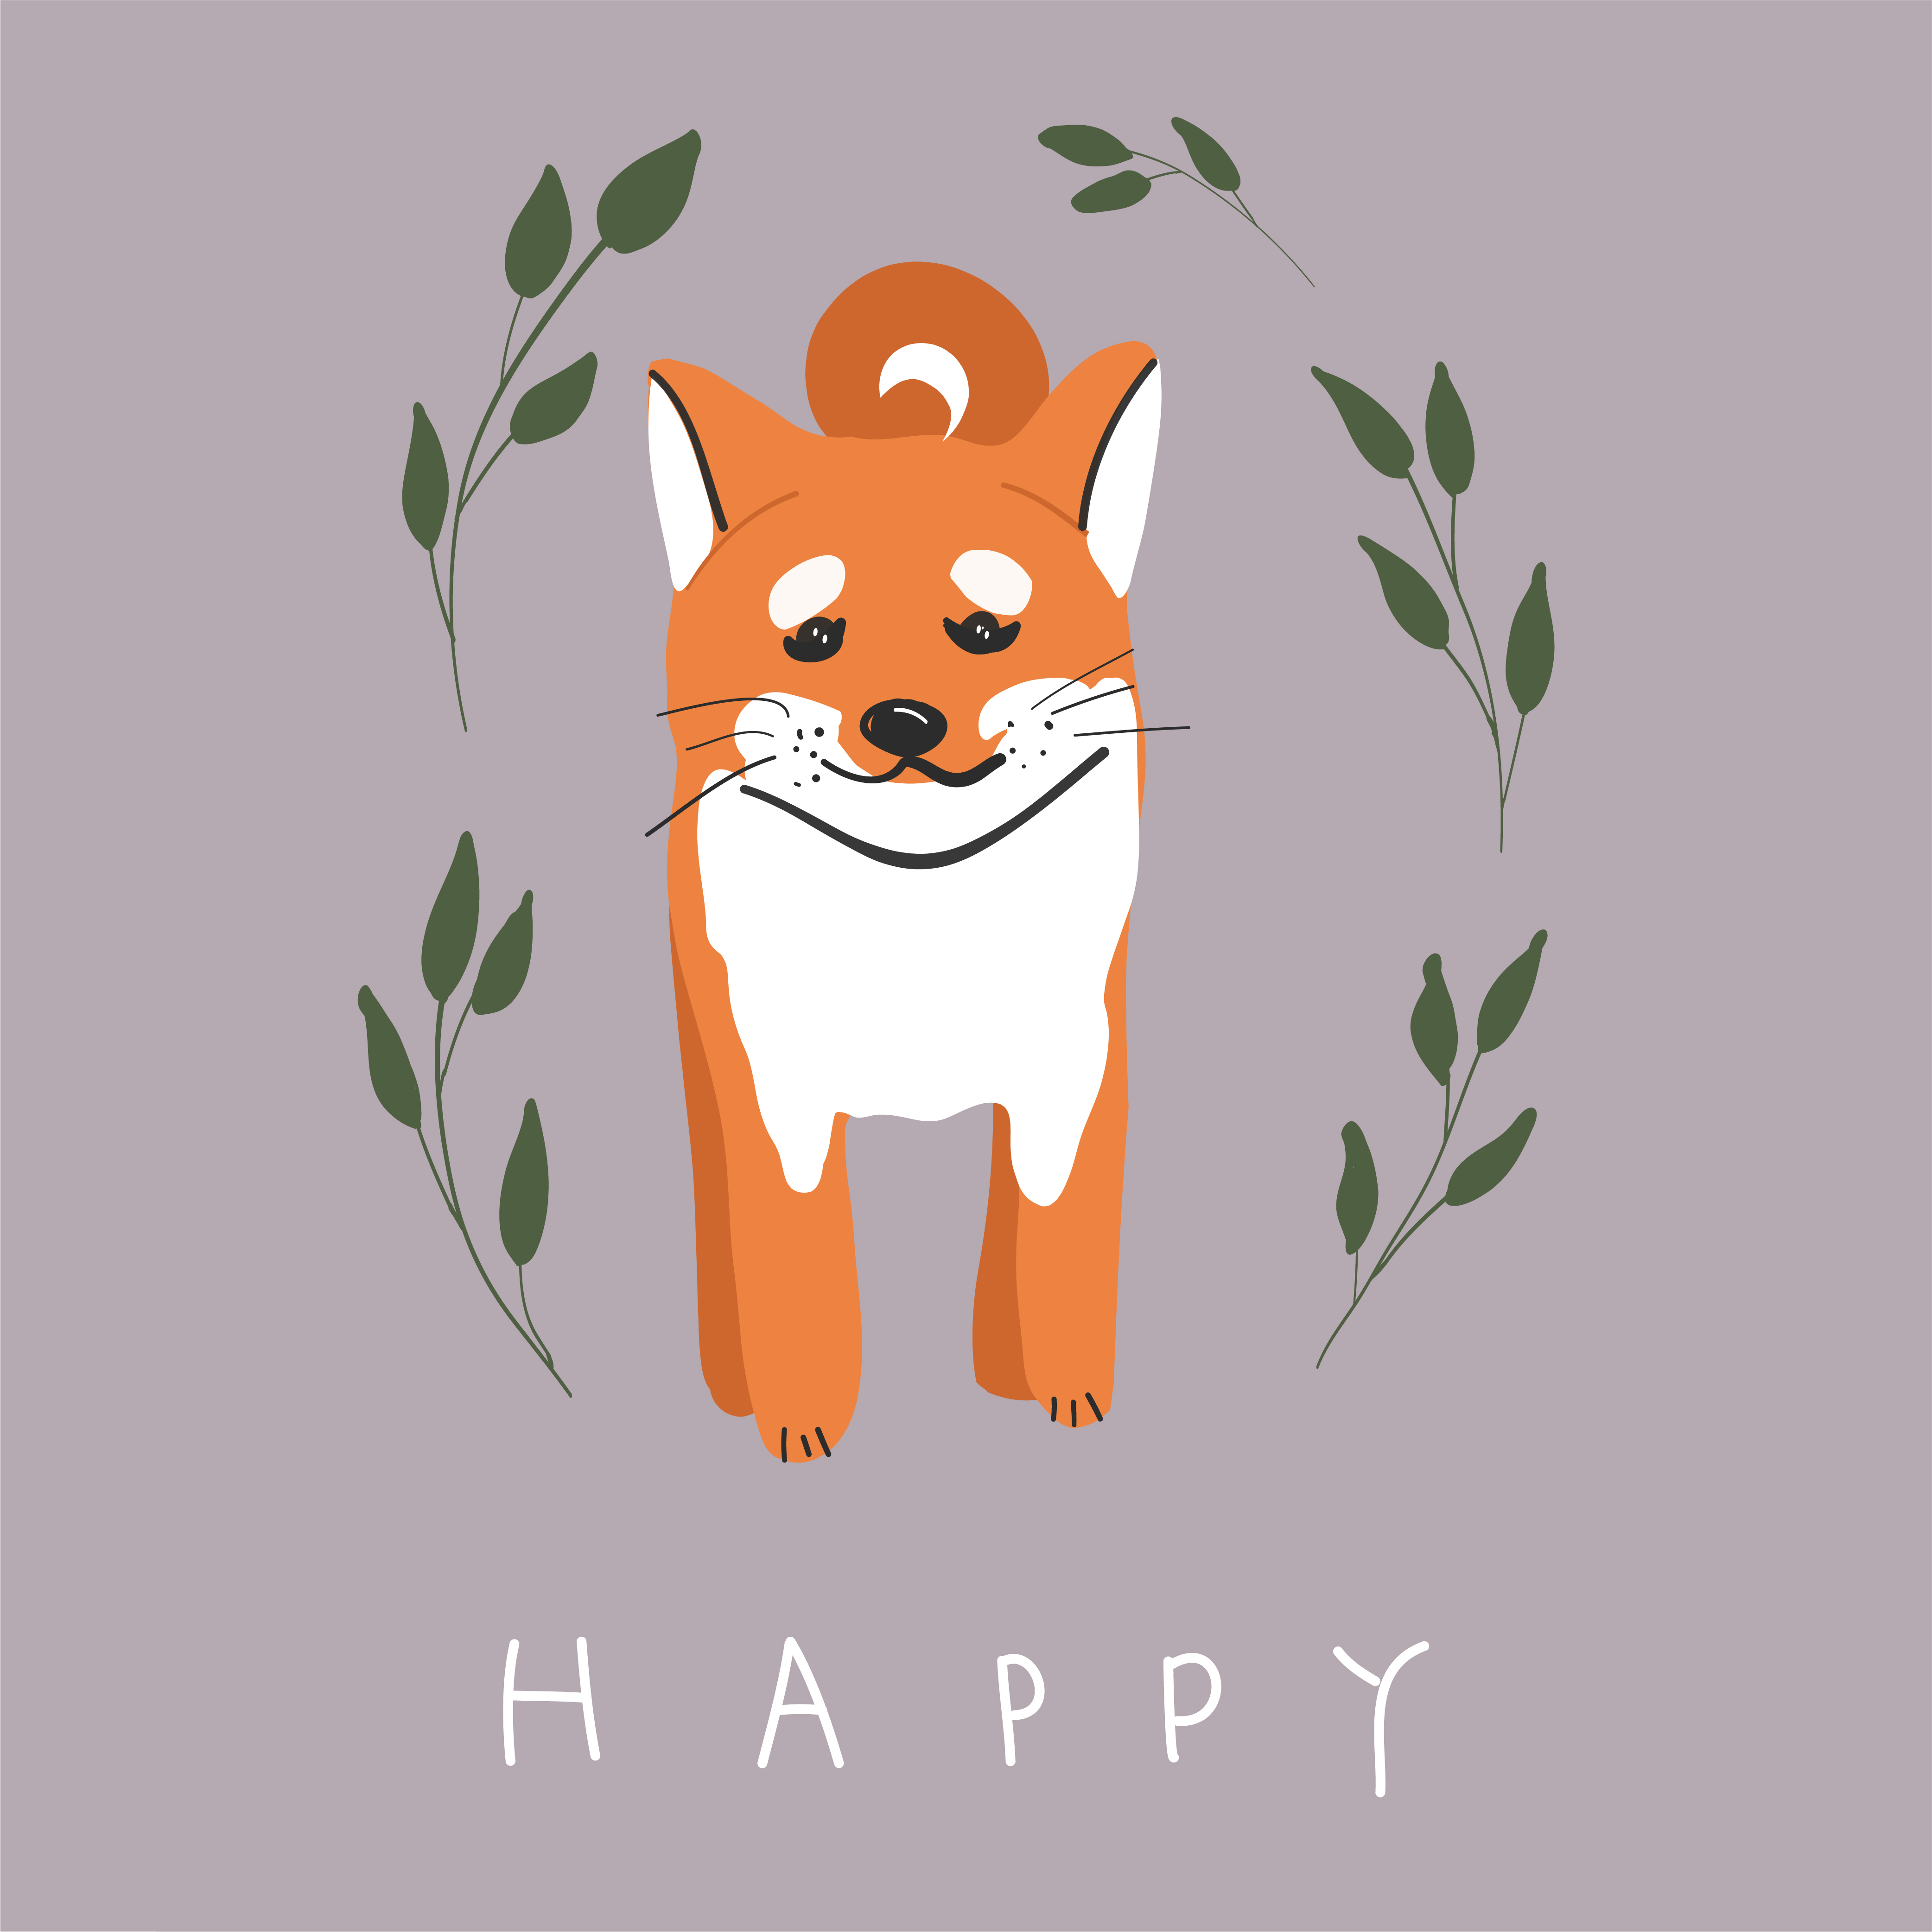 Cute colorful happy shiba inu dog smiling isolated on white background